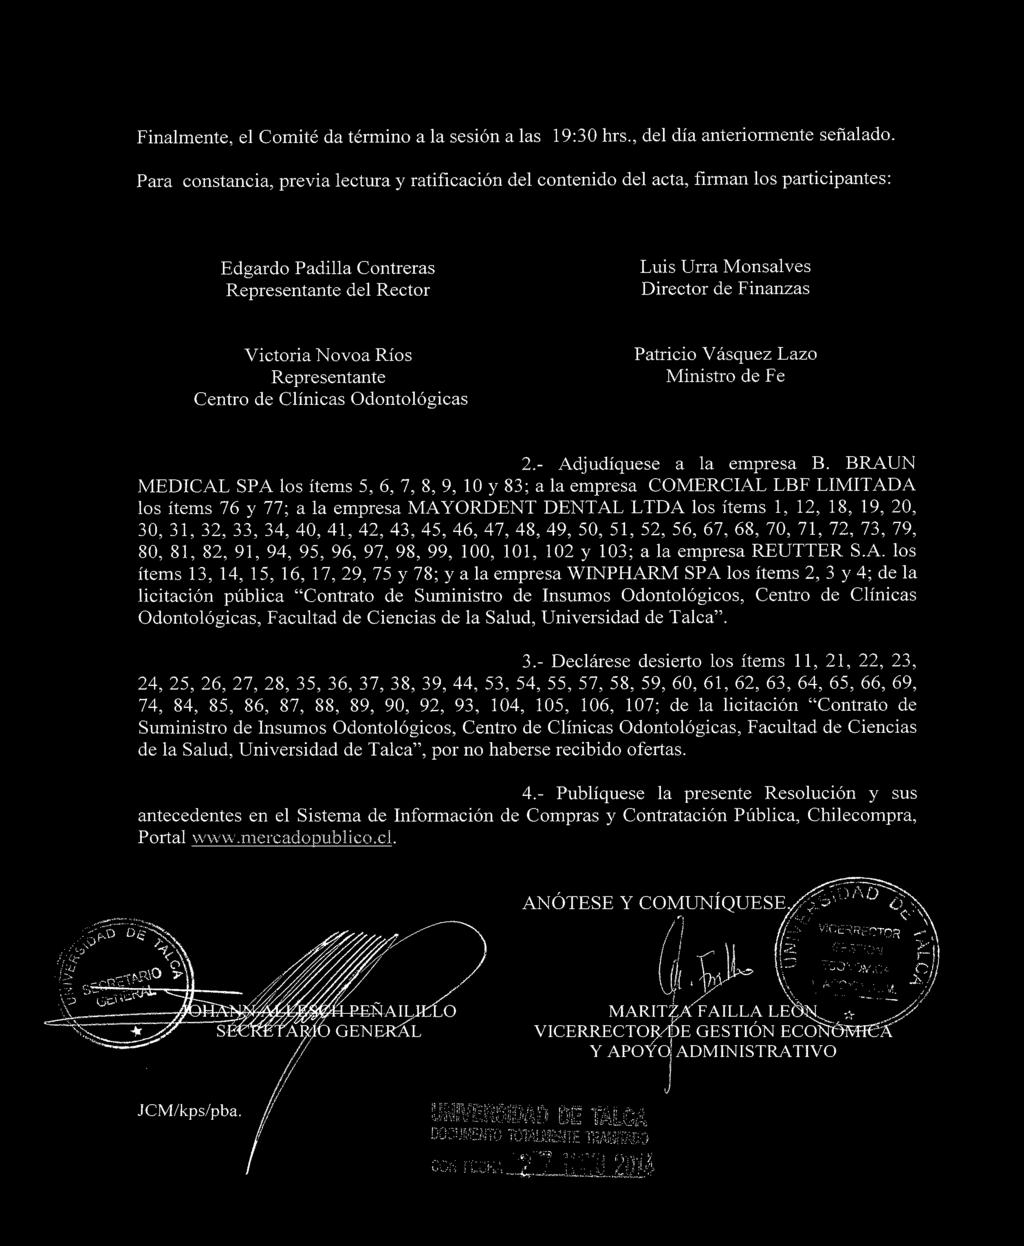 Novoa Ríos Representante Centro de Clínicas Odontológicas Patricio Vásquez Lazo Ministro de Fe.- Adjudiqúese a la empresa B.